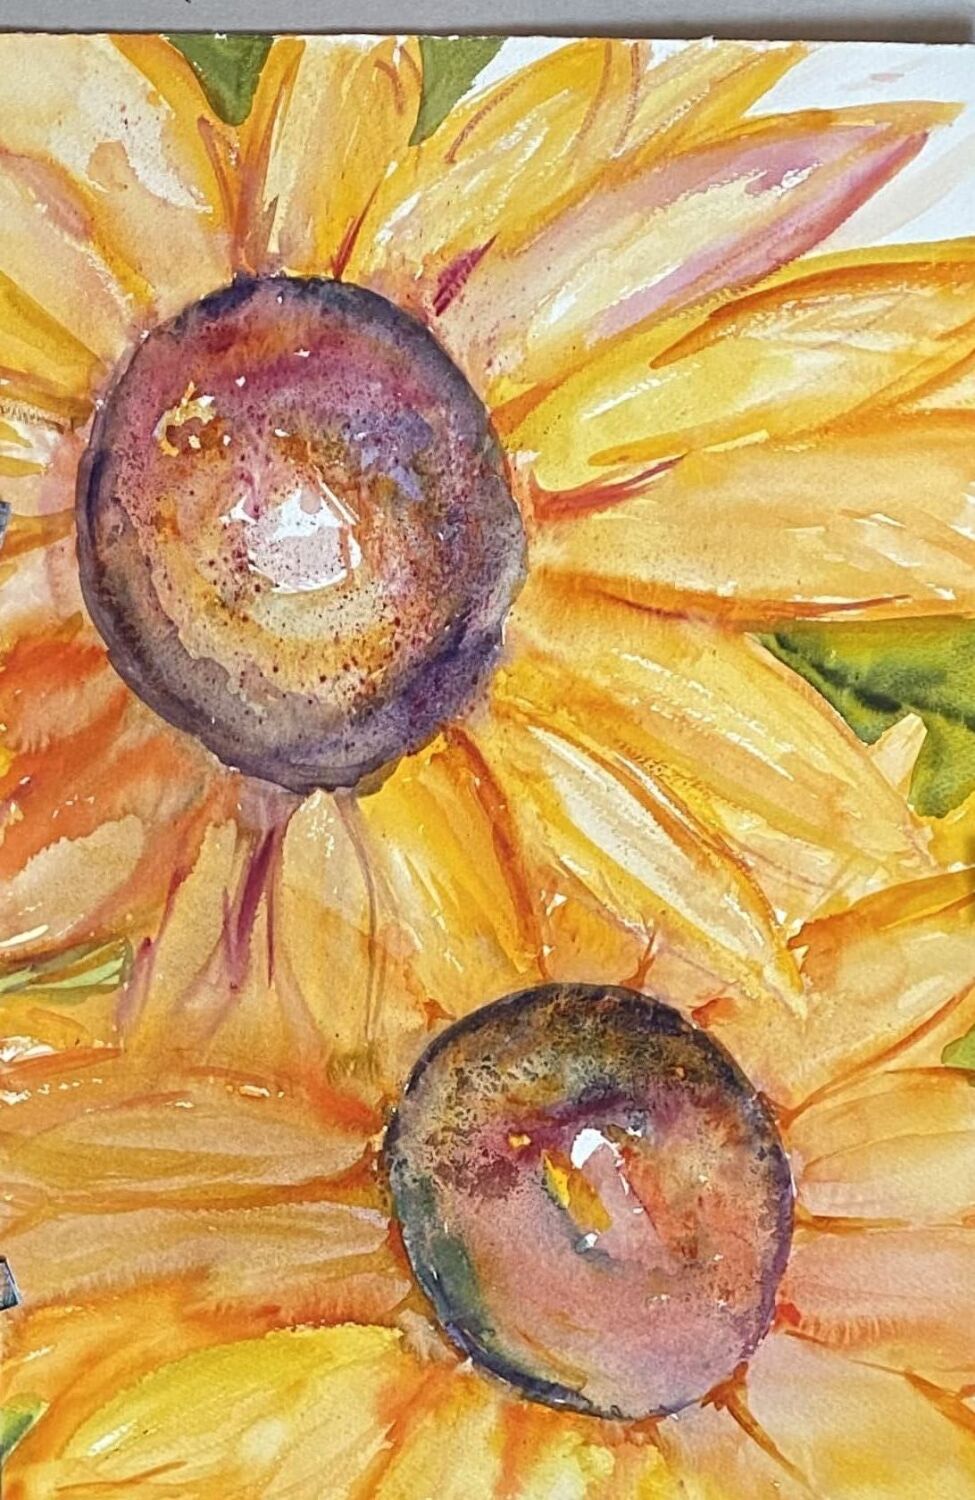 Sunflower Pair of twins